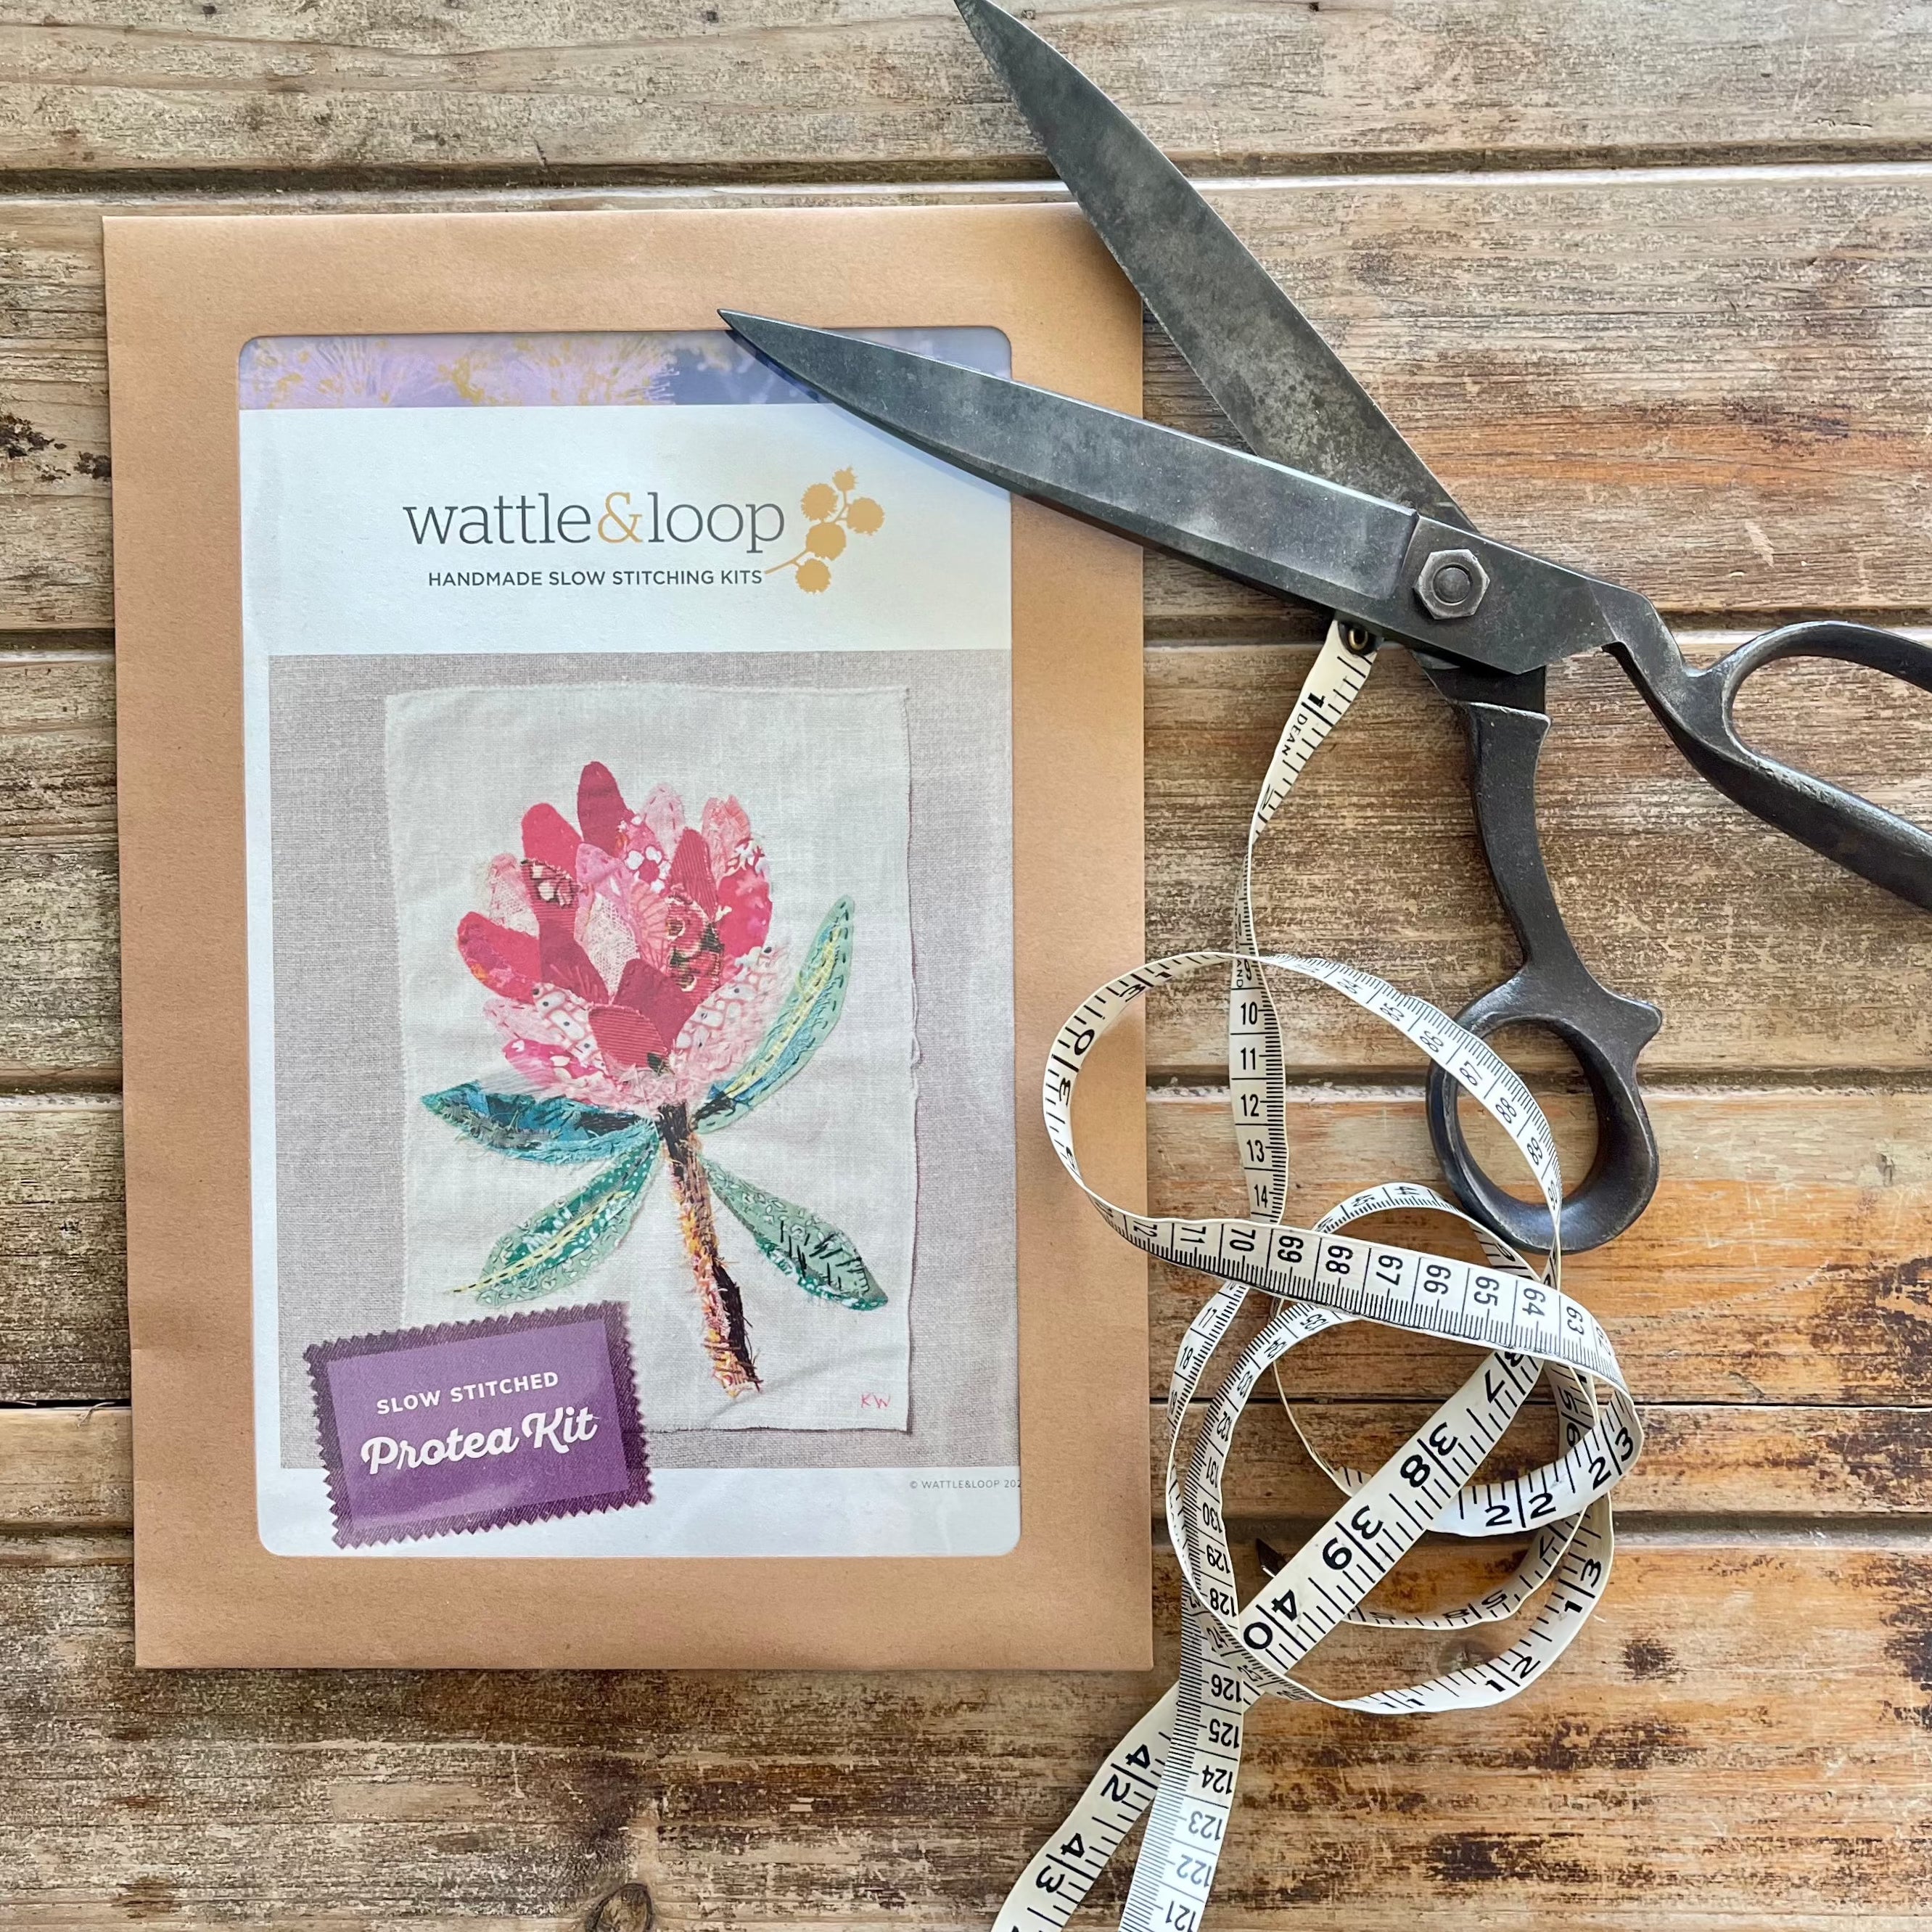 Wattle & Loop - Handmade slow sticking kits